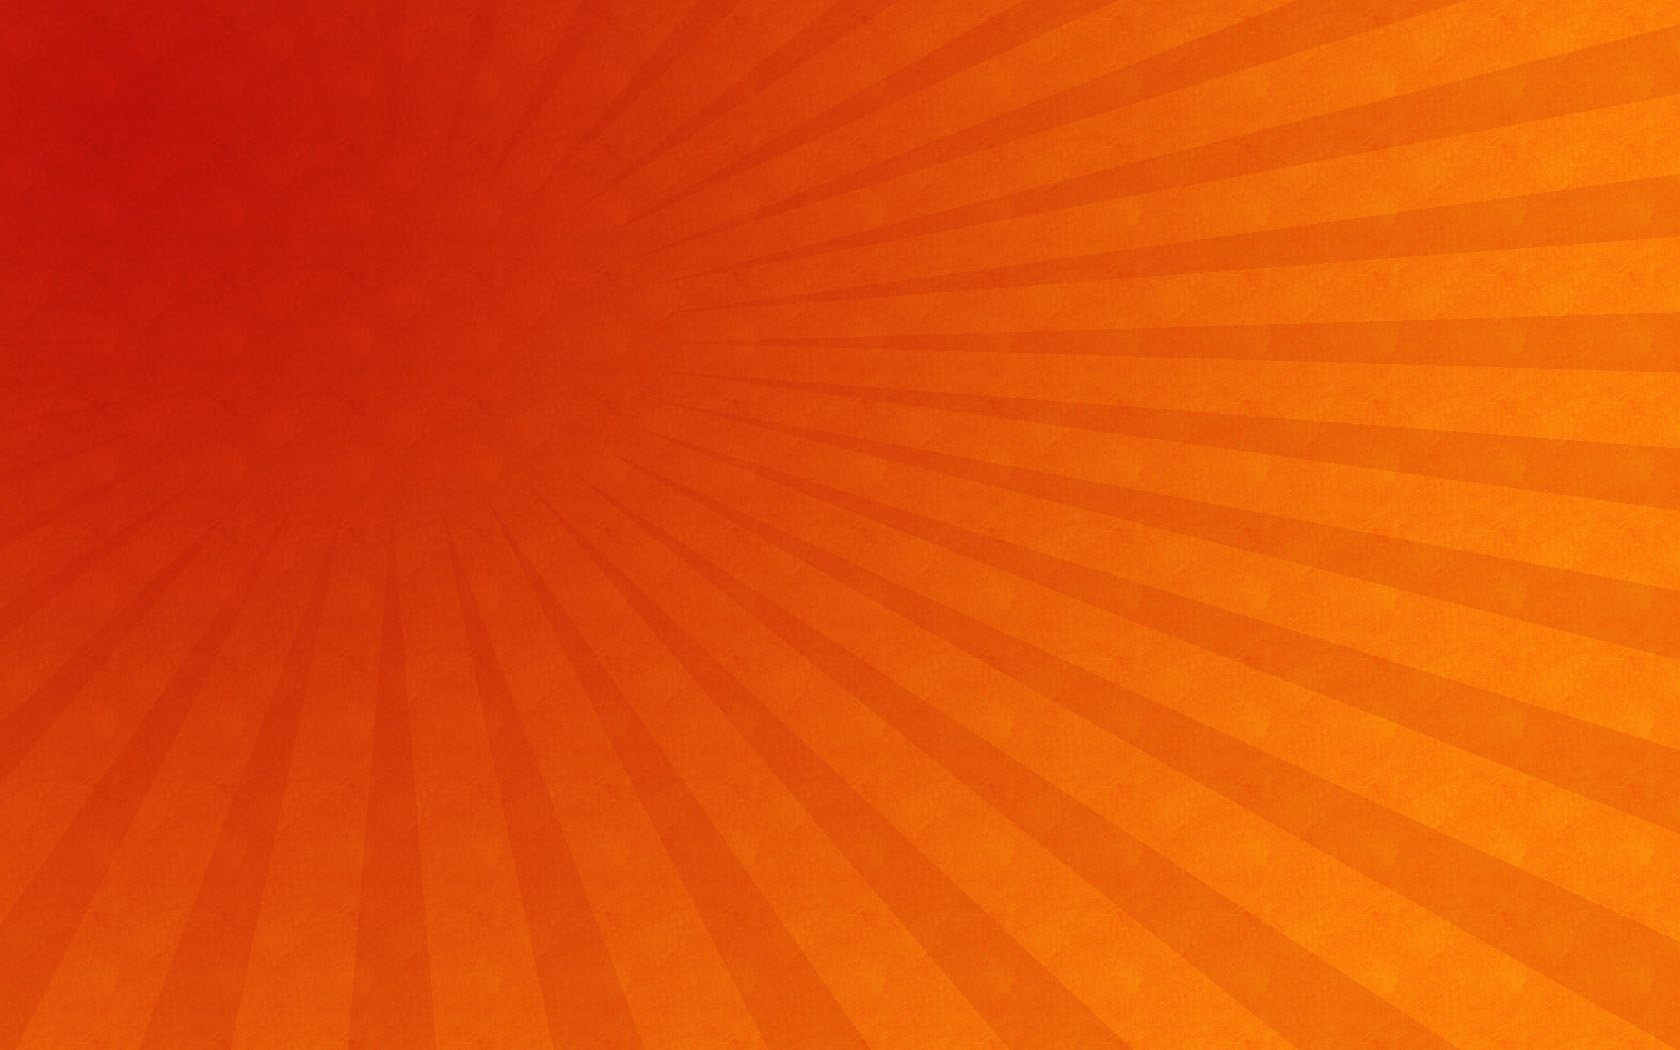 Red Orange Radial Burst Ws By Terpmeister